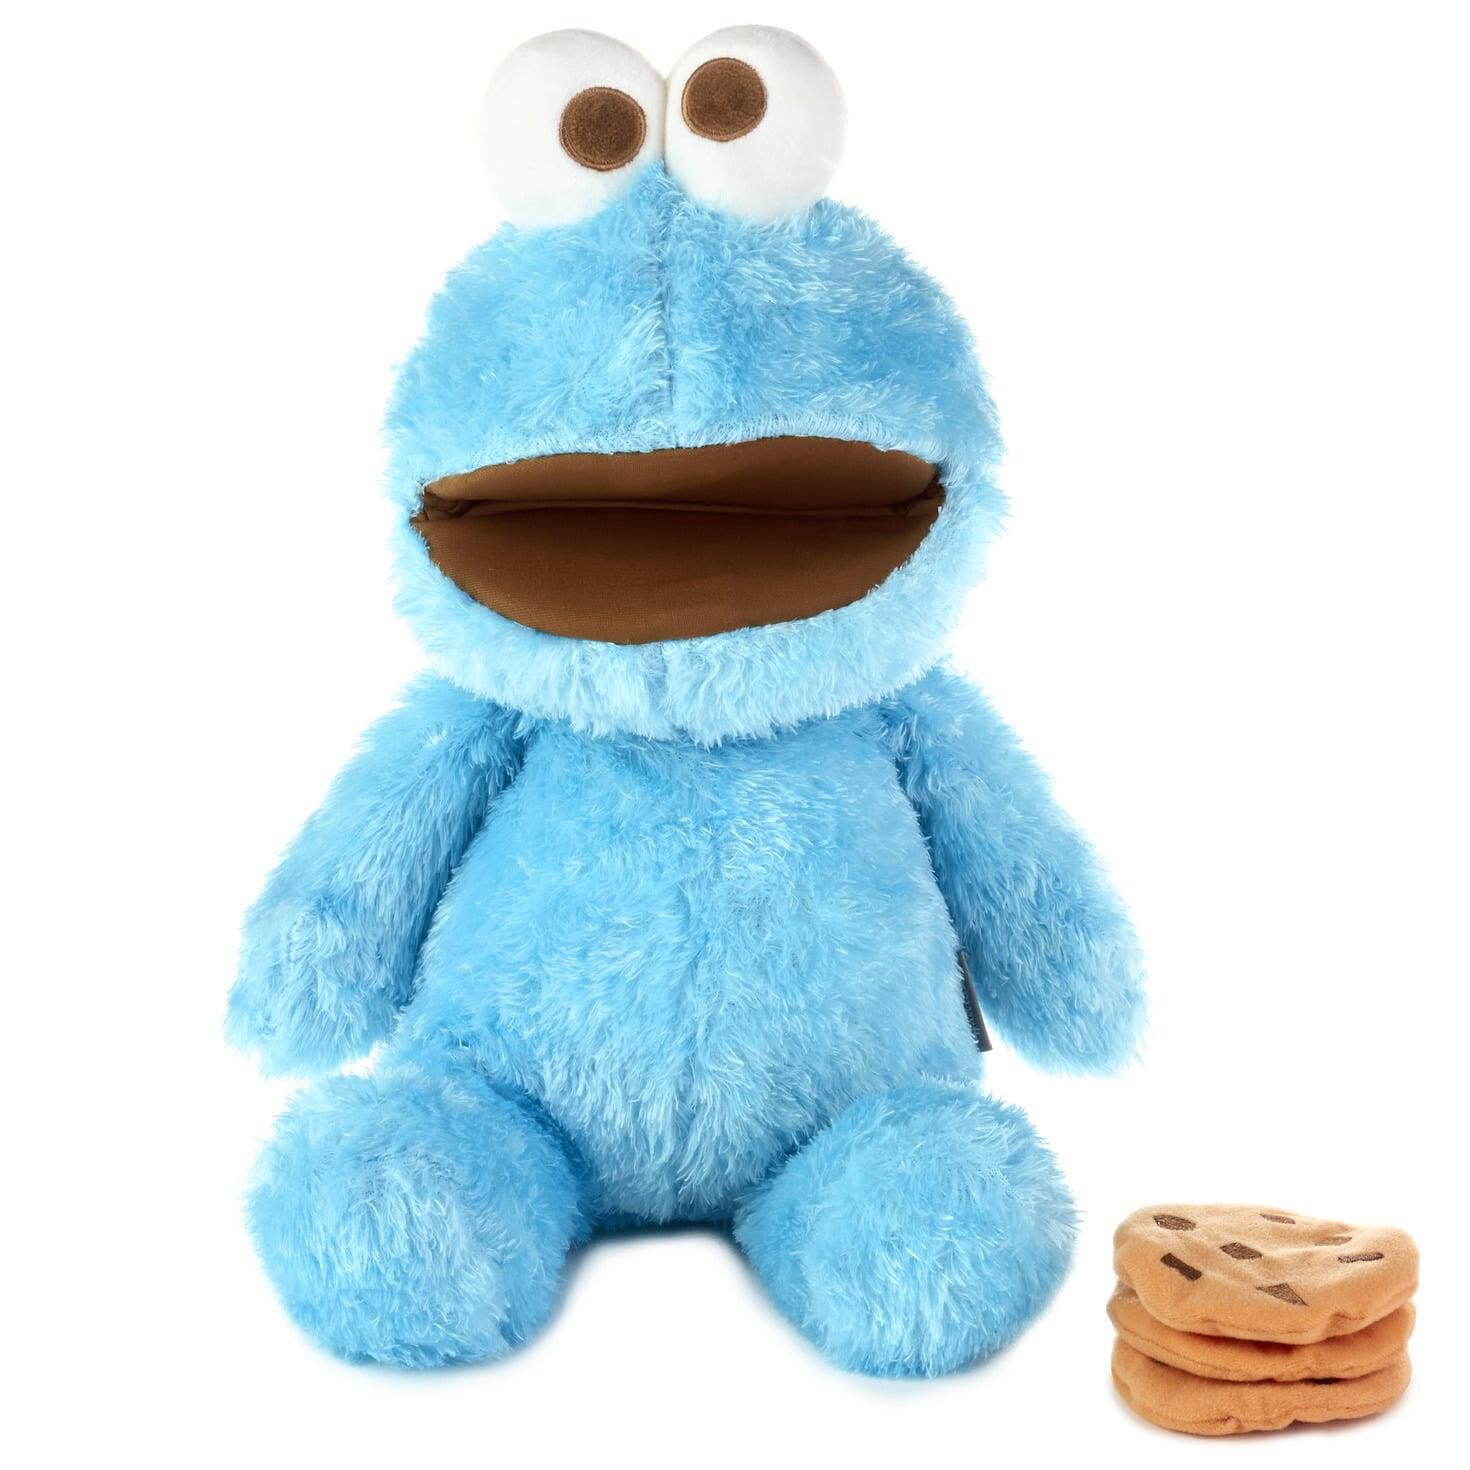 sesame street cookie monster toy